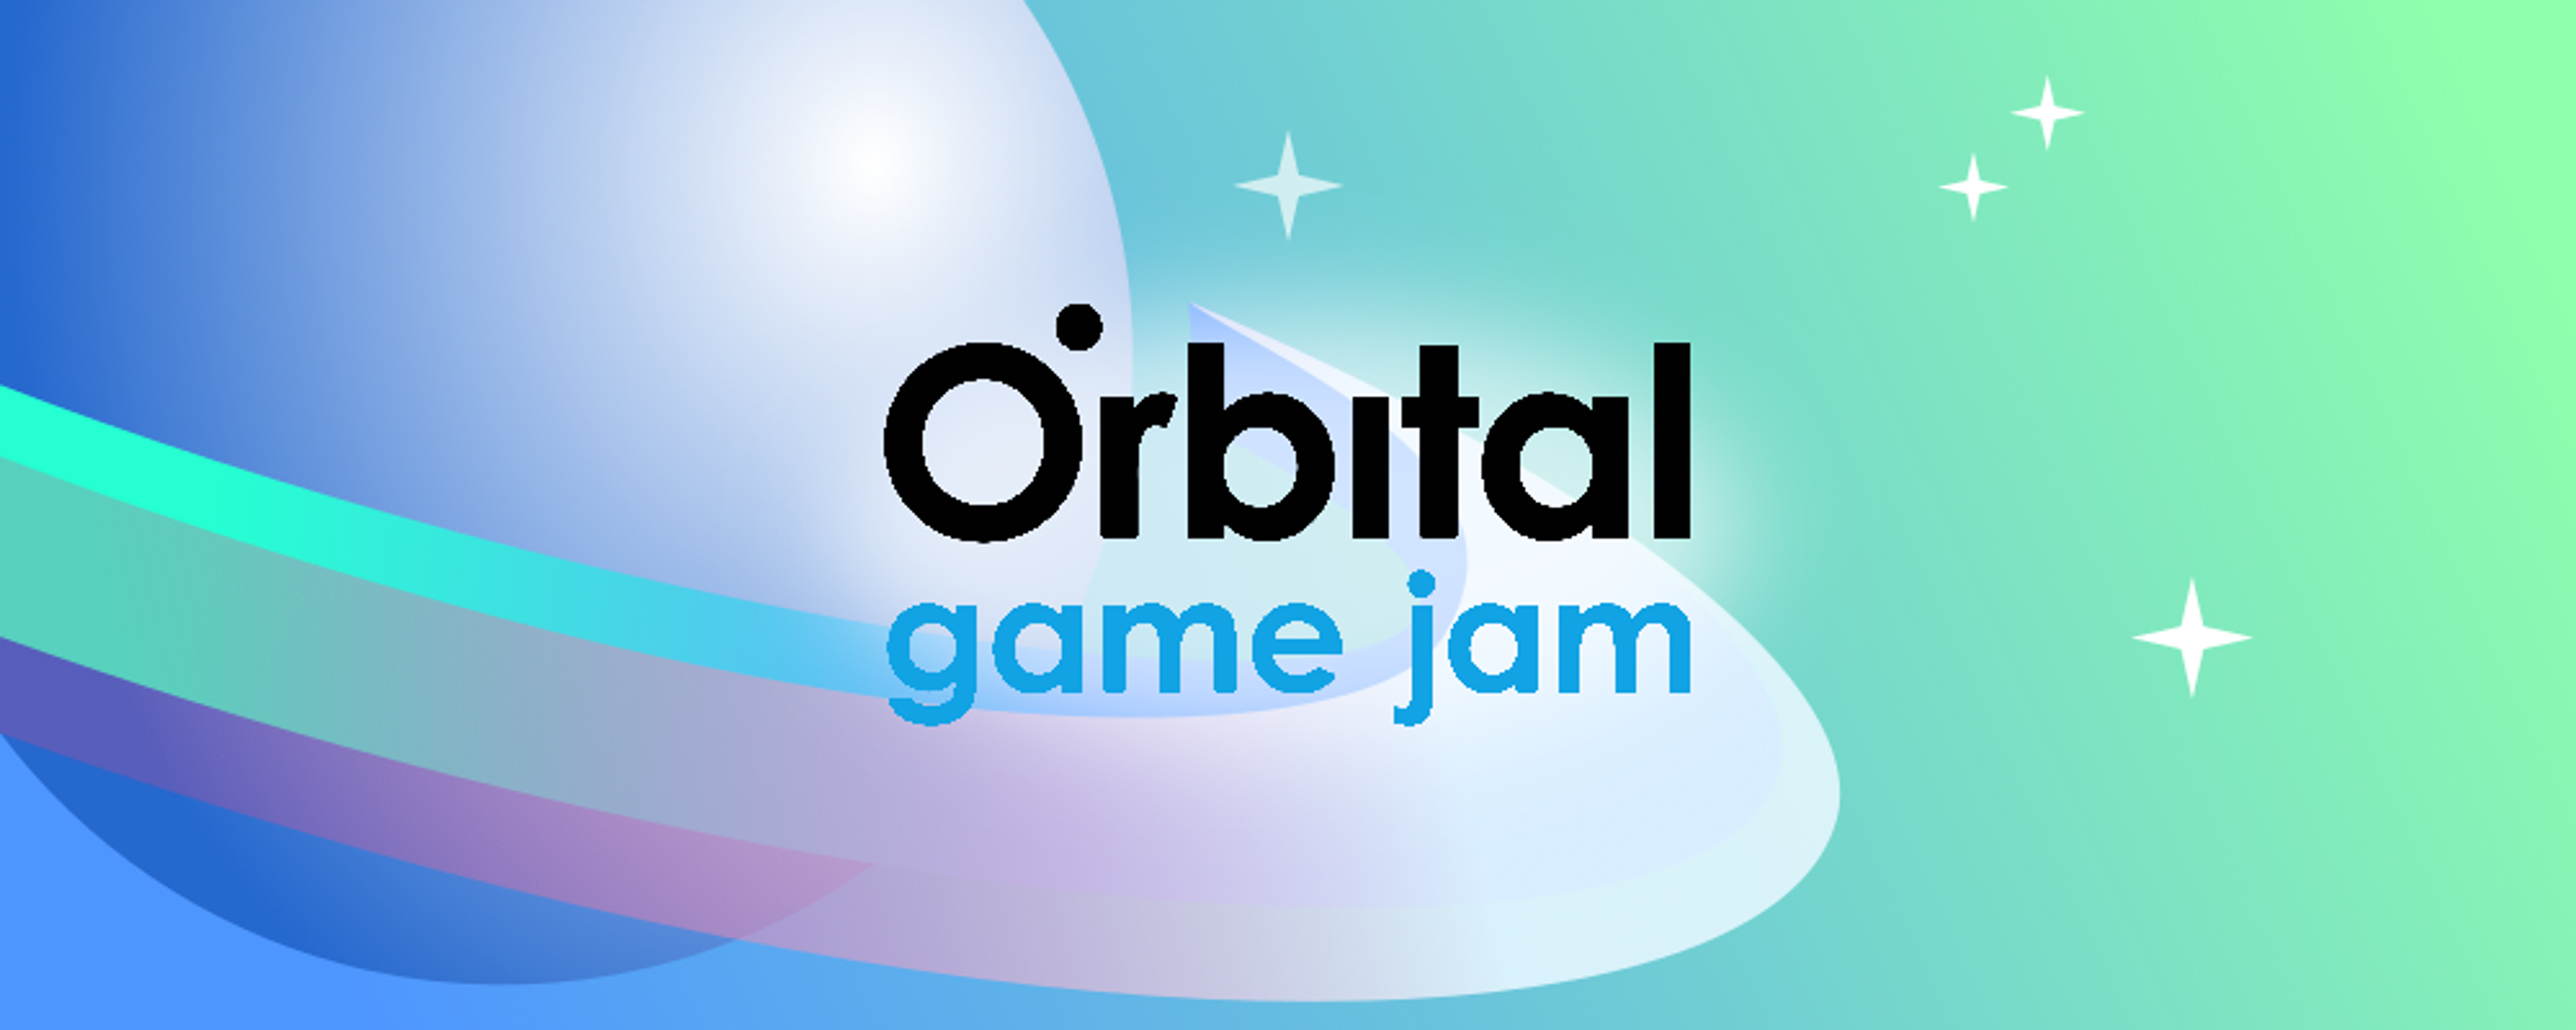 Orbital Game Jam